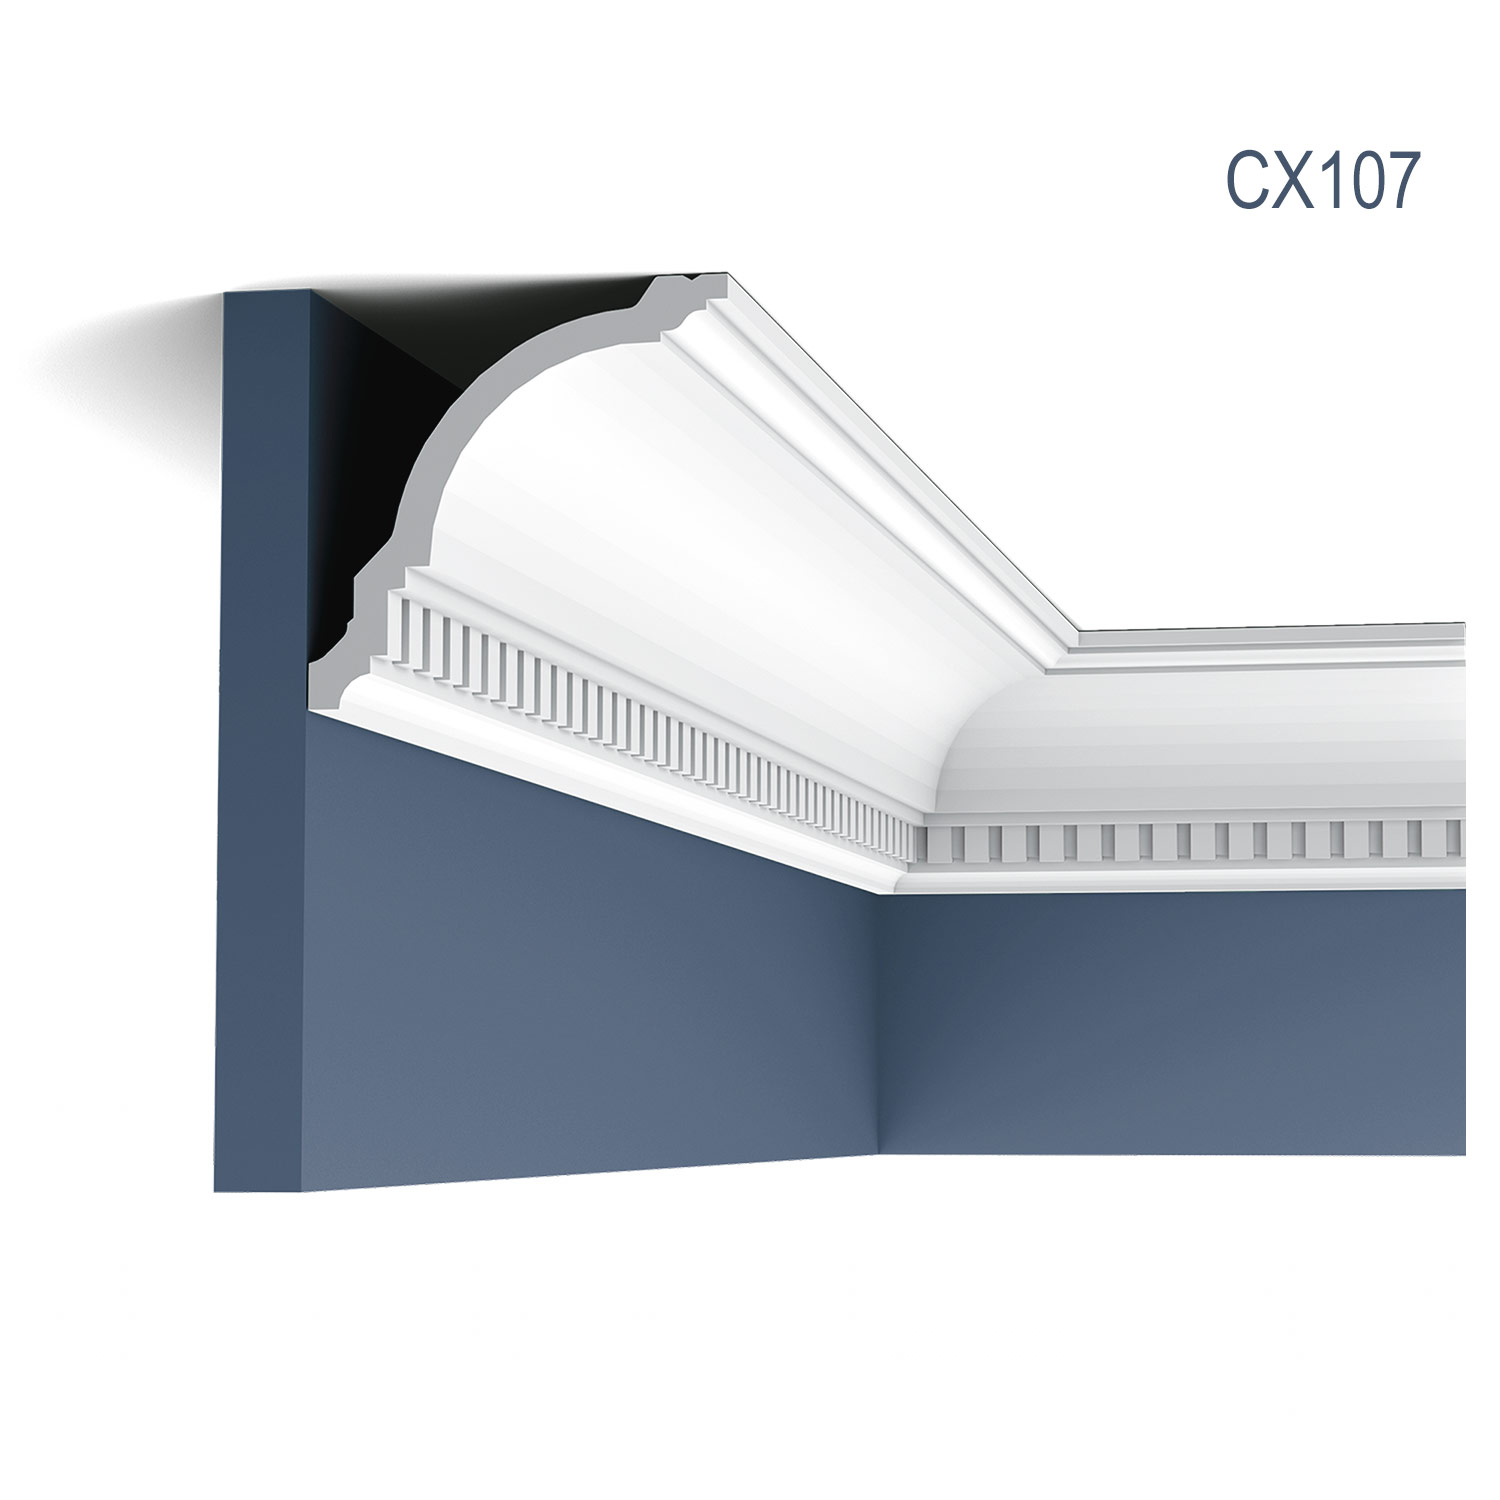 Cornisa Axxent CX107, Dimensiuni: 200 X 11.8 X 11.7 cm, Orac Decor Orac Decor